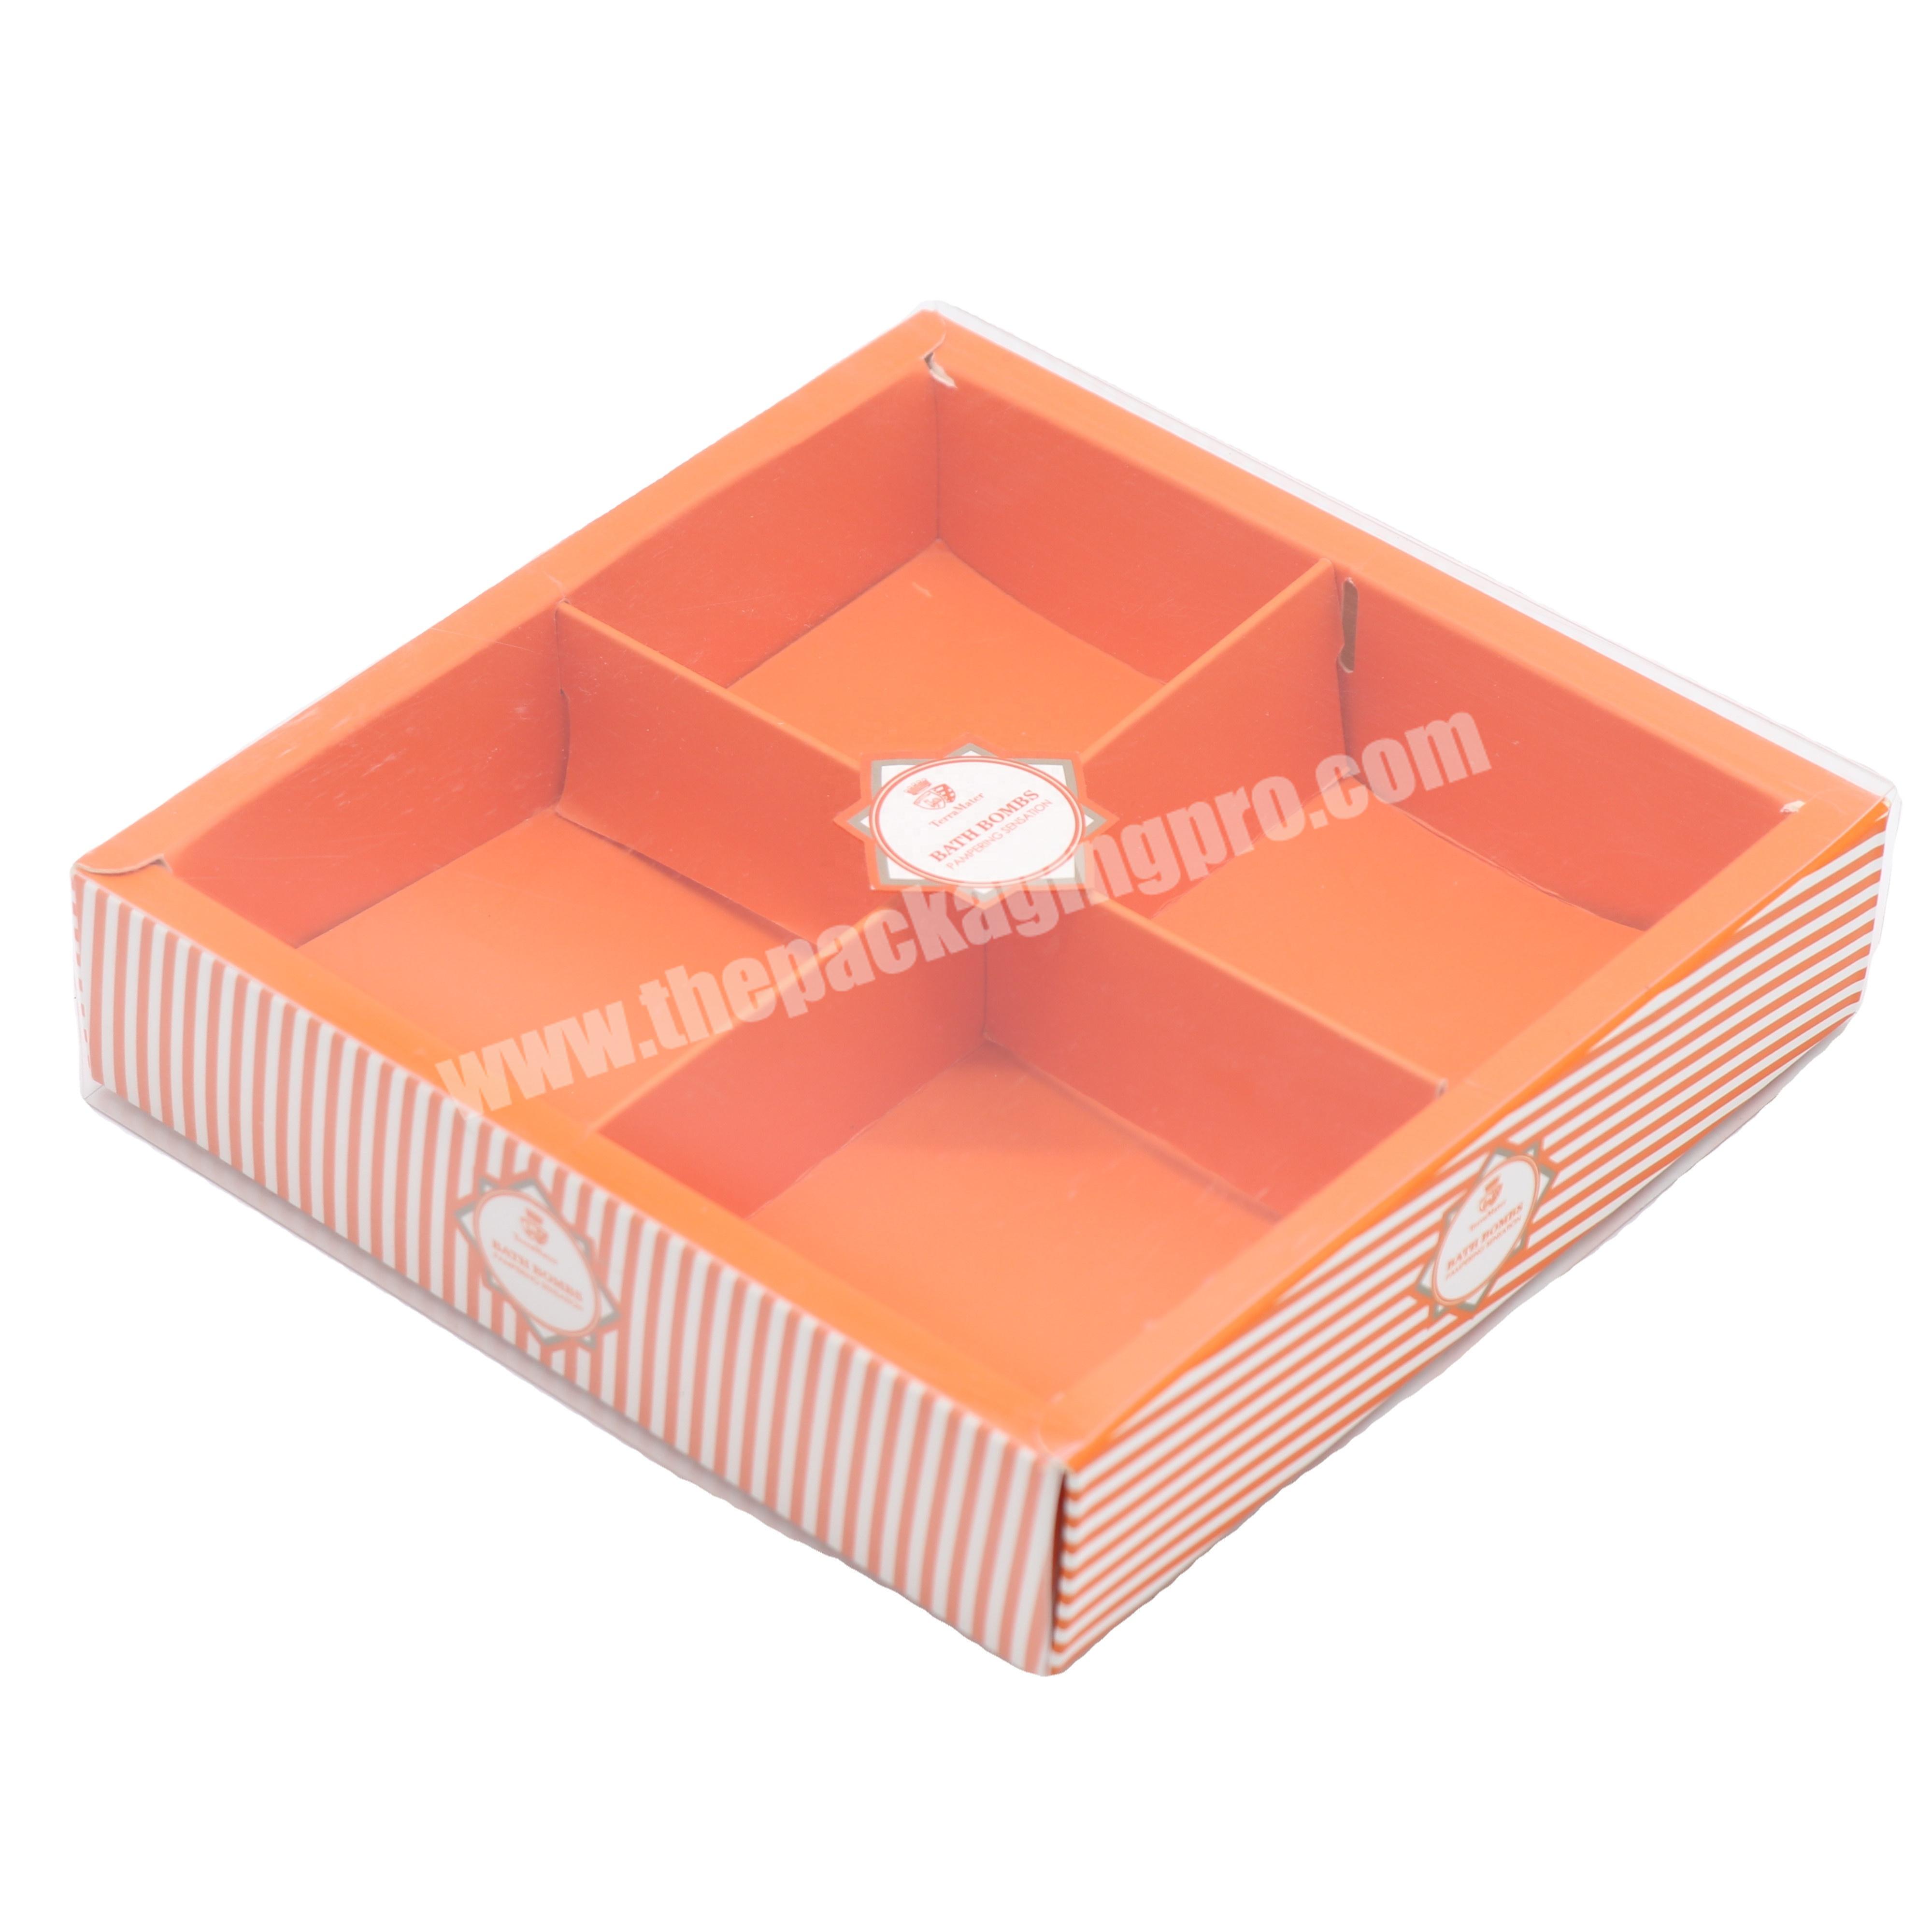 Custom foldable bath bombs packaging box with clear sleeve lid